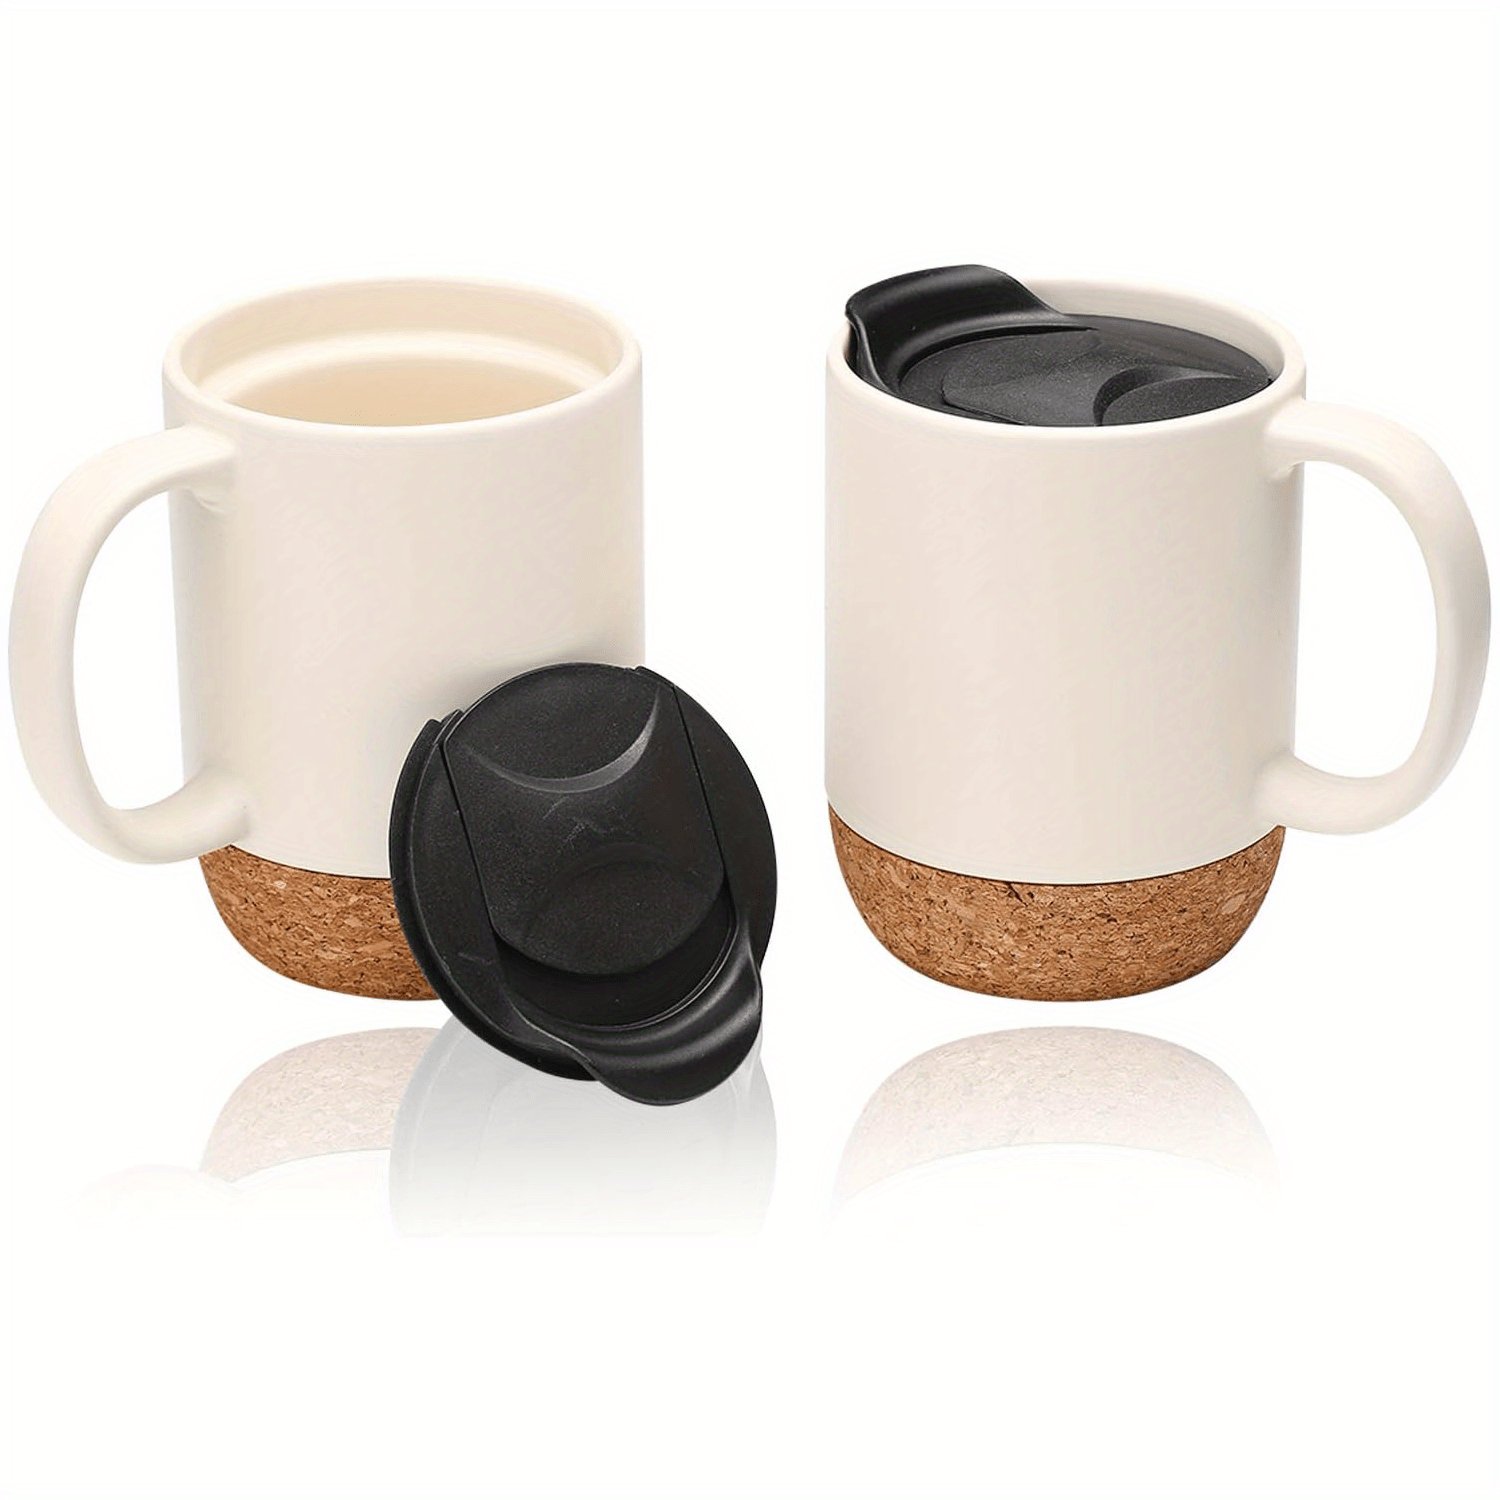 225ML Coffee Mug Tasas De Cafe Tazas De Ceramica Creativas Vasos